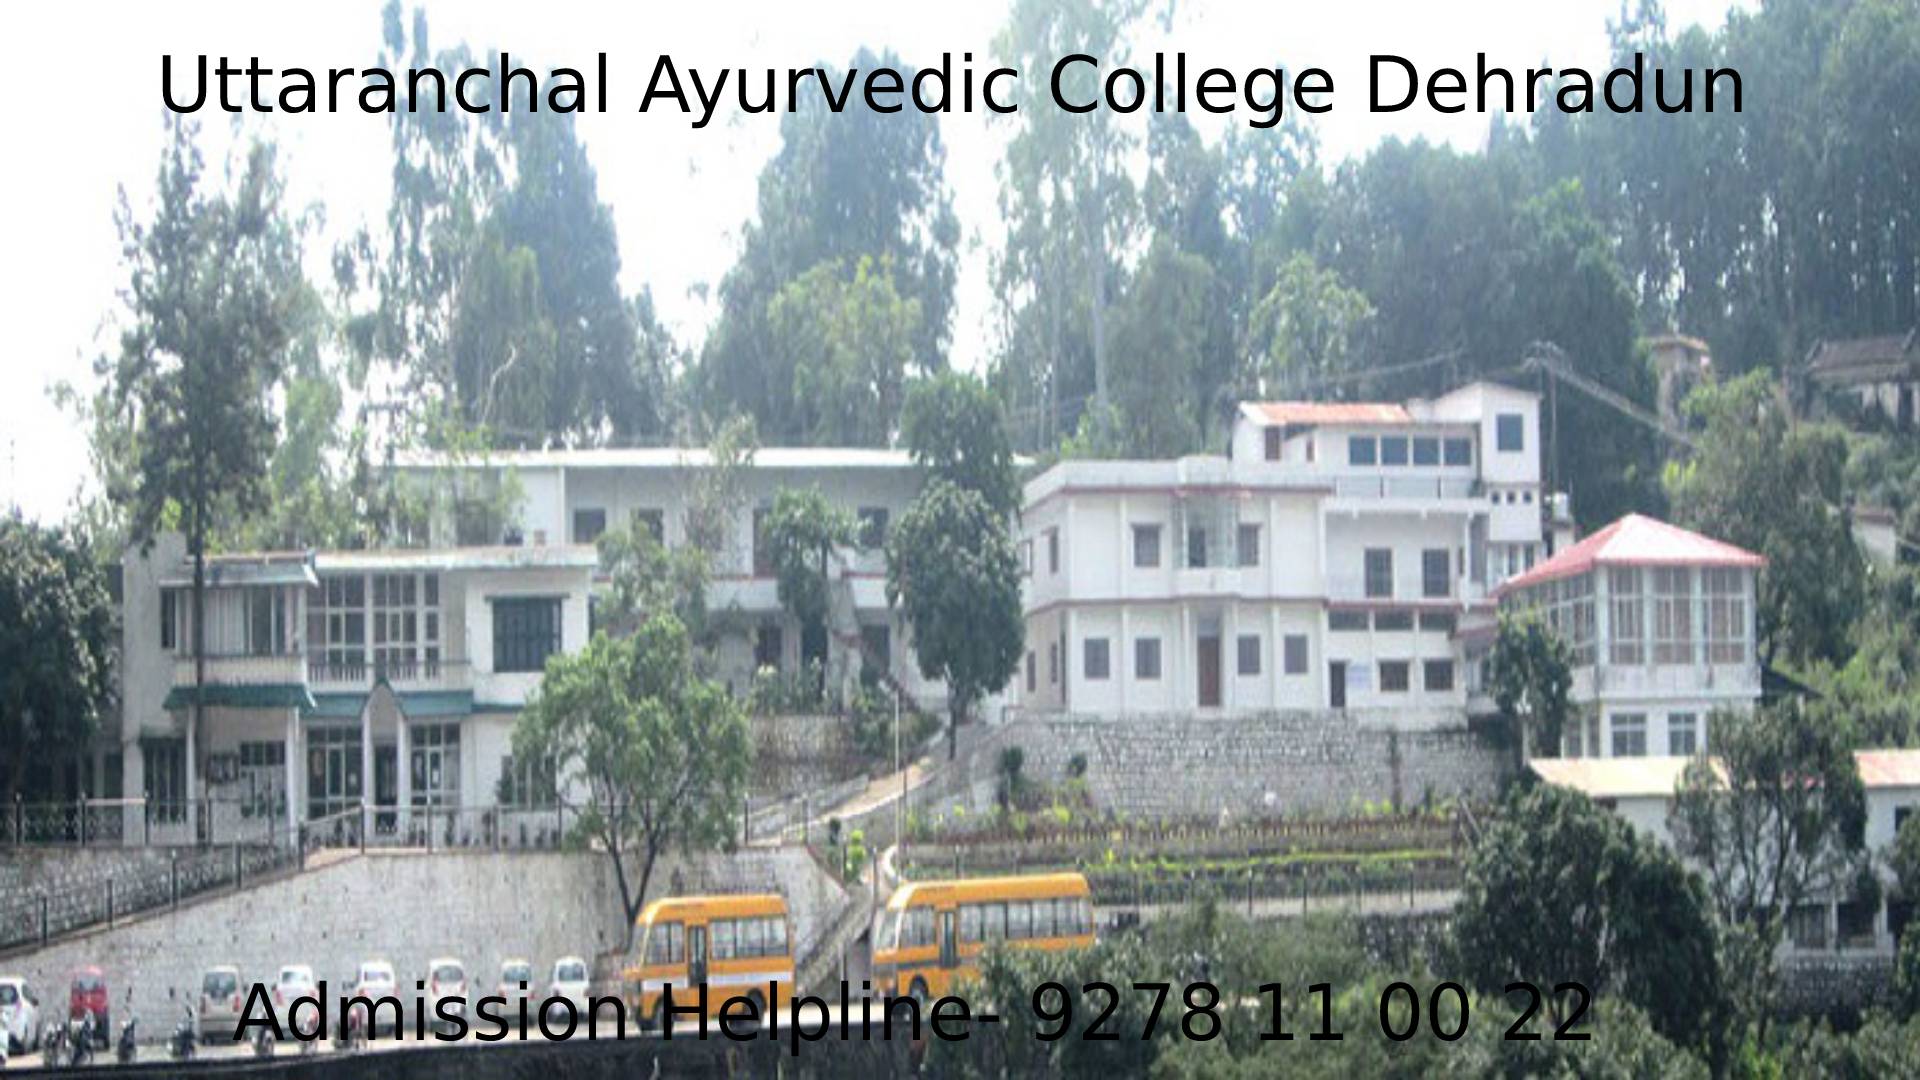 Uttaranchal Ayurvedic College Dehradun